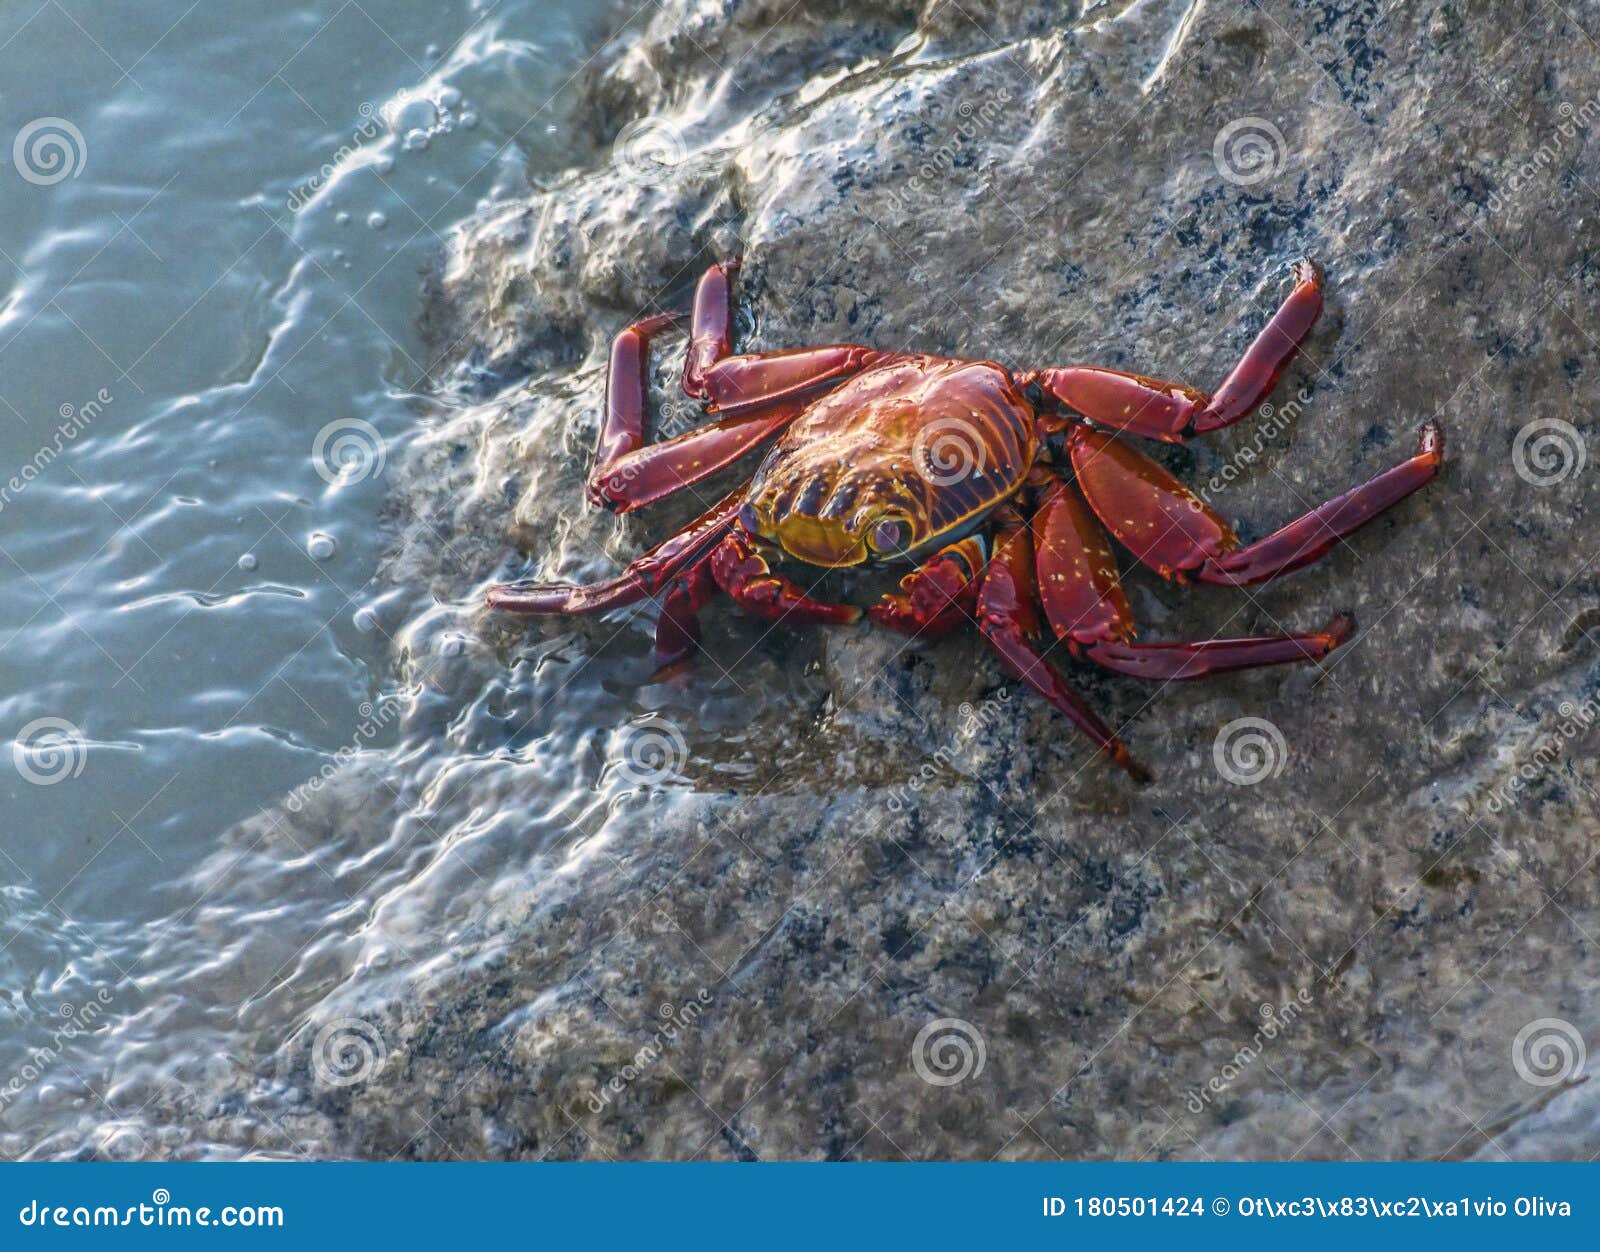 a red crab grapsus grapsus, over the coast rocks, in galapagos, ecuador.